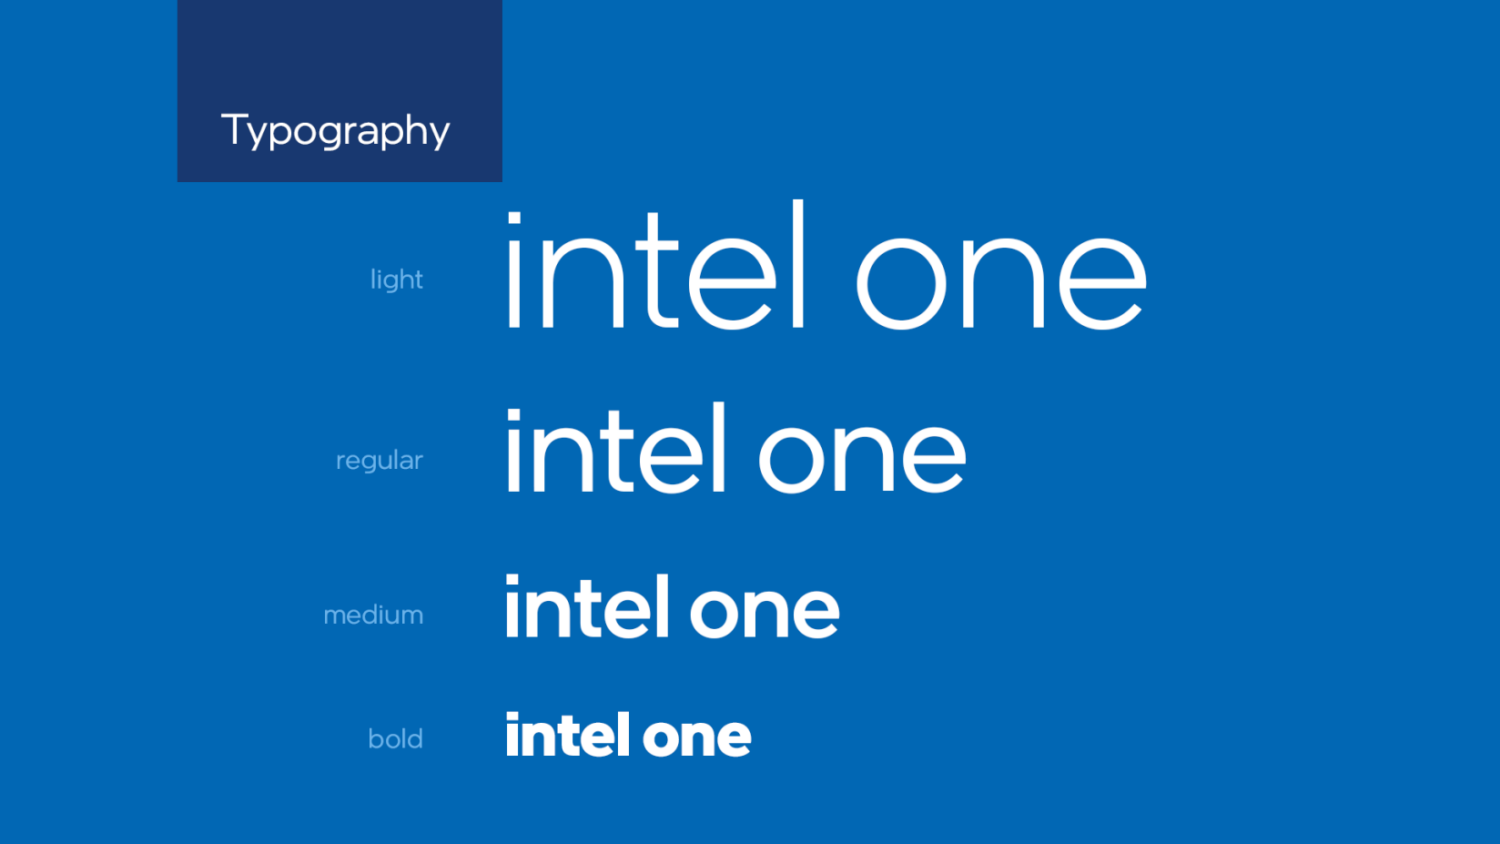 Intel Brand Typography, Quelle: Intel